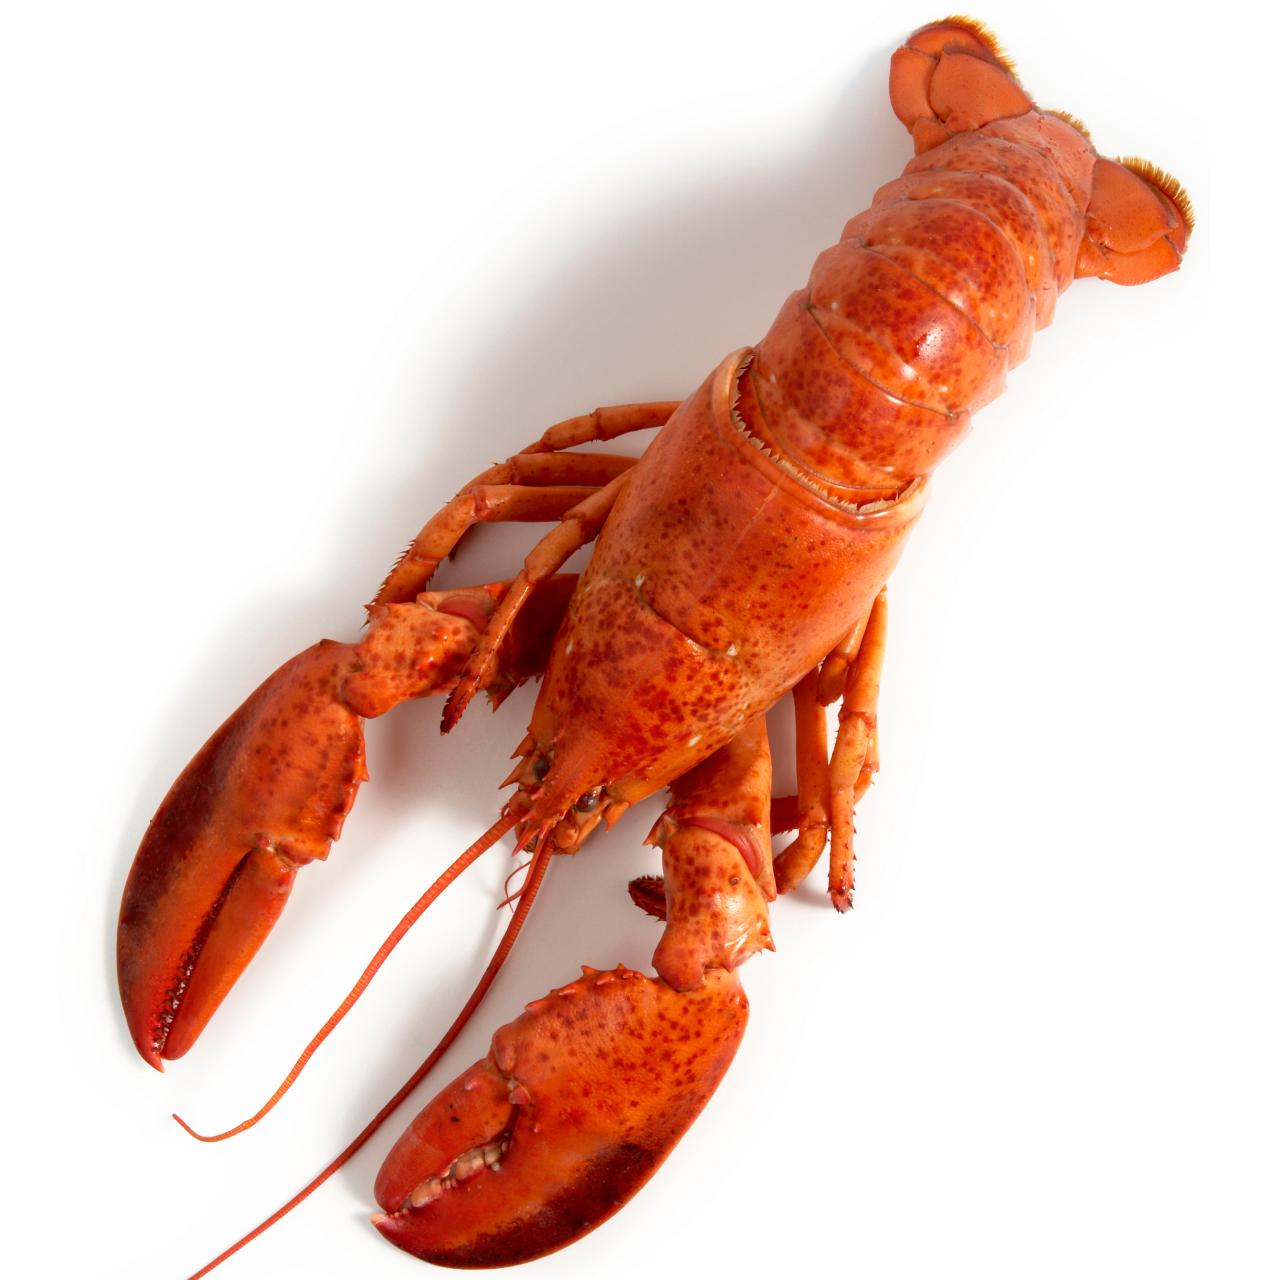 https://food.fnr.sndimg.com/content/dam/images/food/fullset/2008/6/12/0/lobster.jpg.rend.hgtvcom.1280.1280.suffix/1383078066367.jpeg